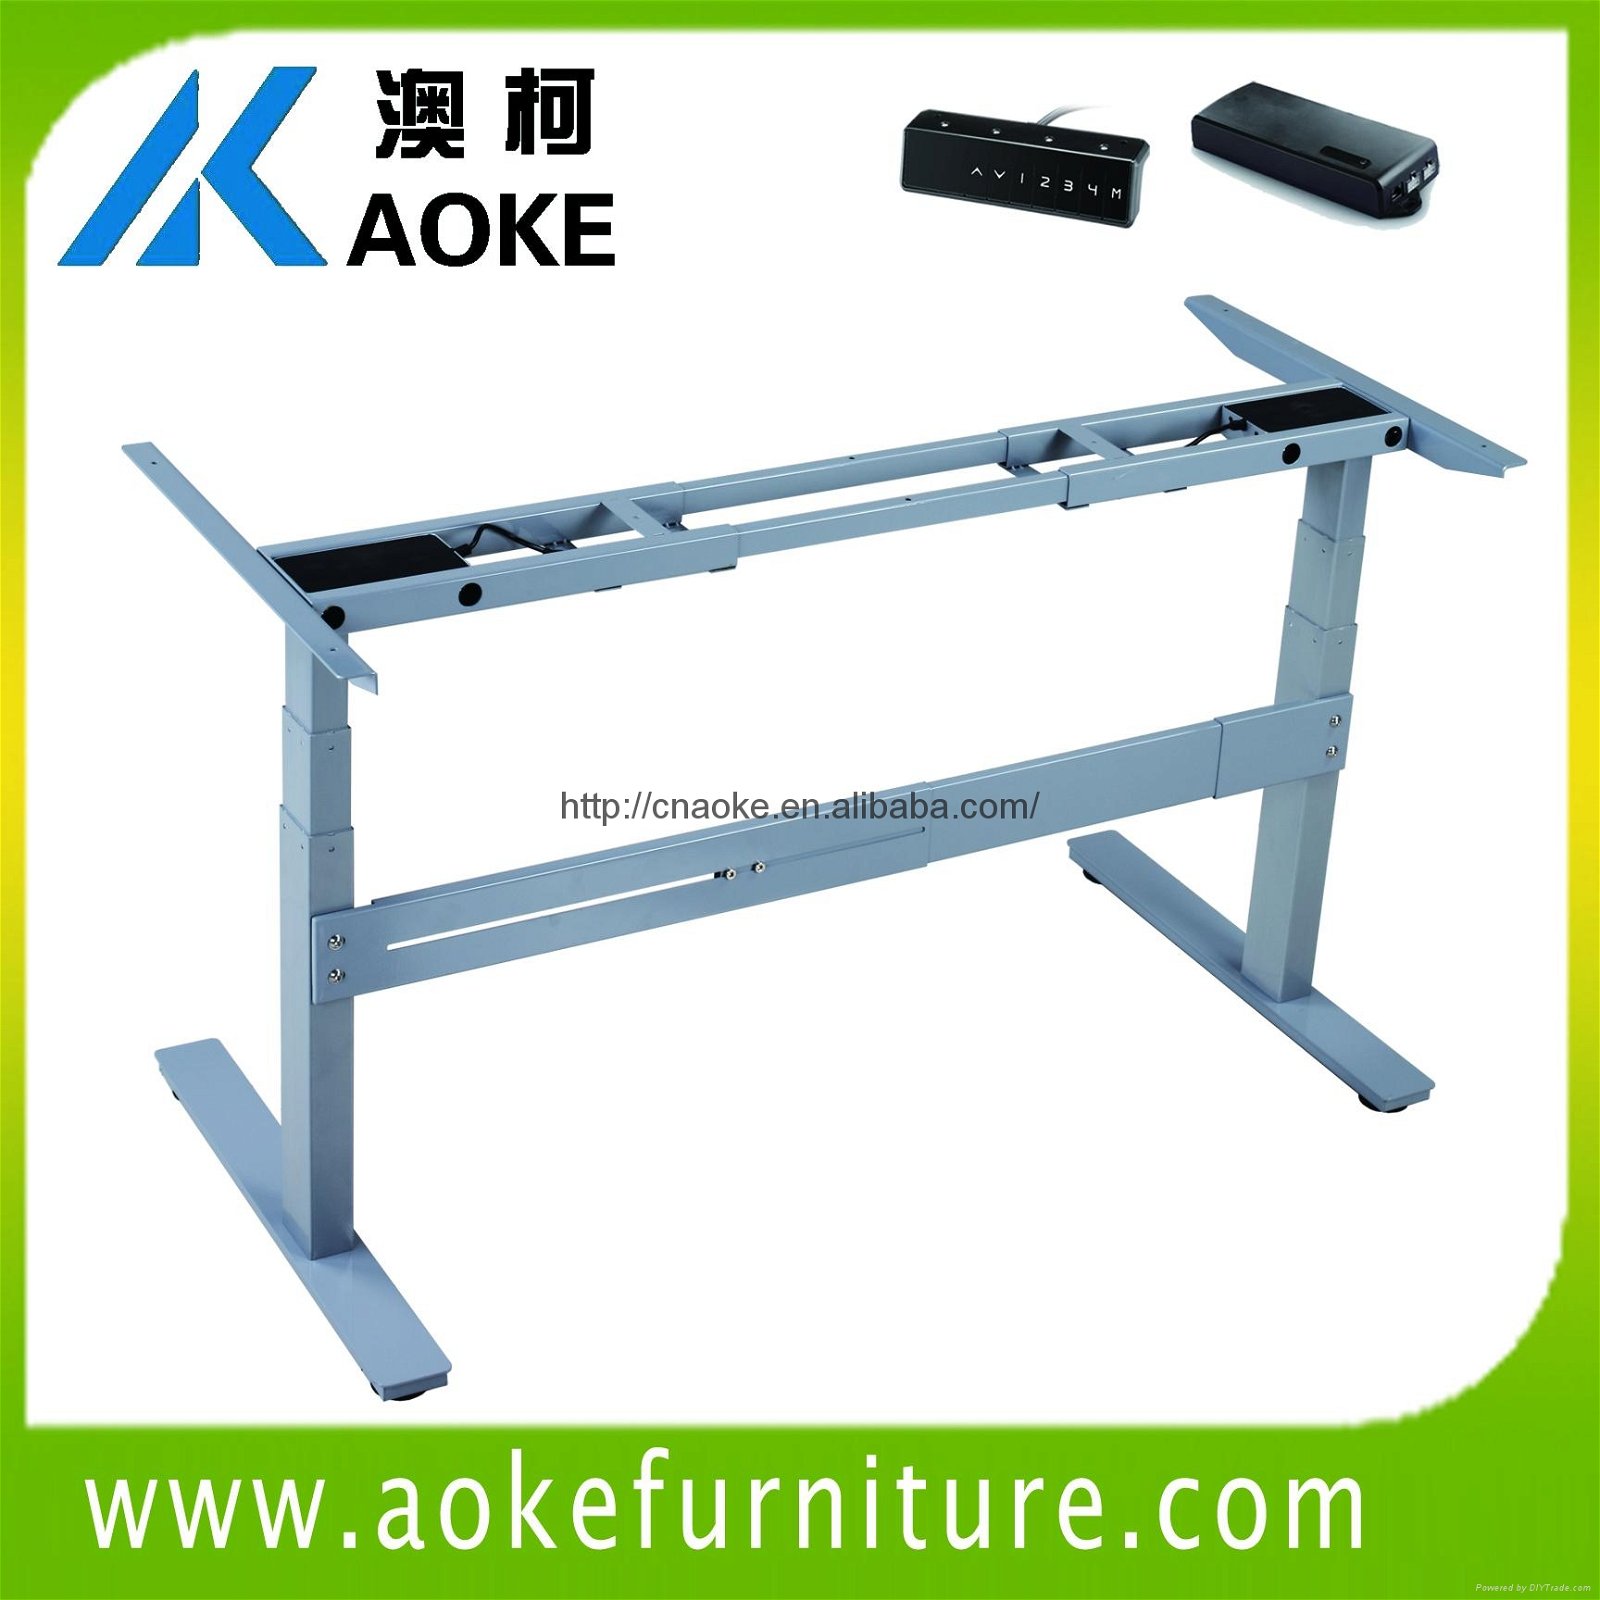 AOKE AK2RT-ZB2 adjustable height desks 4